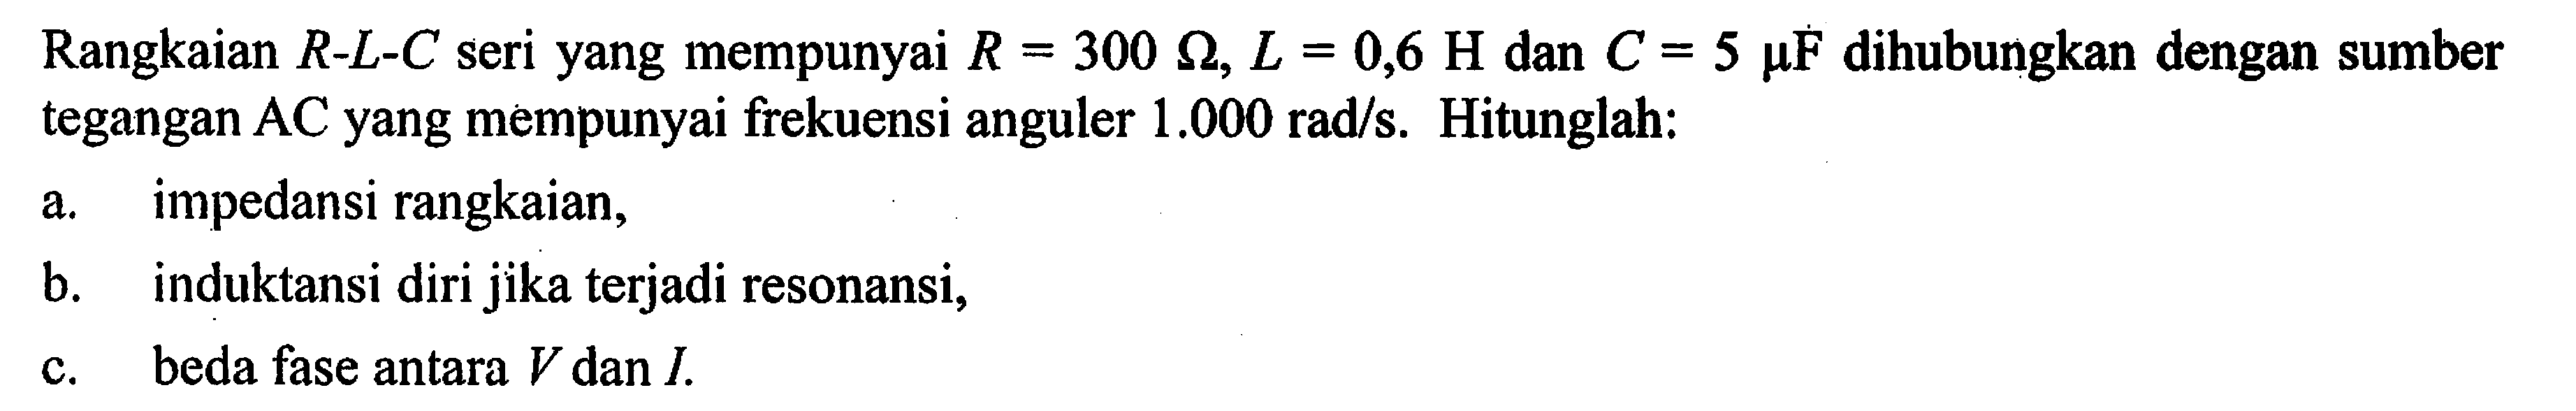 Rangkaian R-L-C seri yang mempunyai R = 300 ohm, L = 0,6 H dan C.= 5 muF dihubungkan dengan sumber tegangan AC yang mempunyai frekuensi anguler 1.000 rad/s. Hitunglah: a. impedansi rangkaian, B. induktansi diri jika terjadi resonansi, C. beda fase antara V dan I.